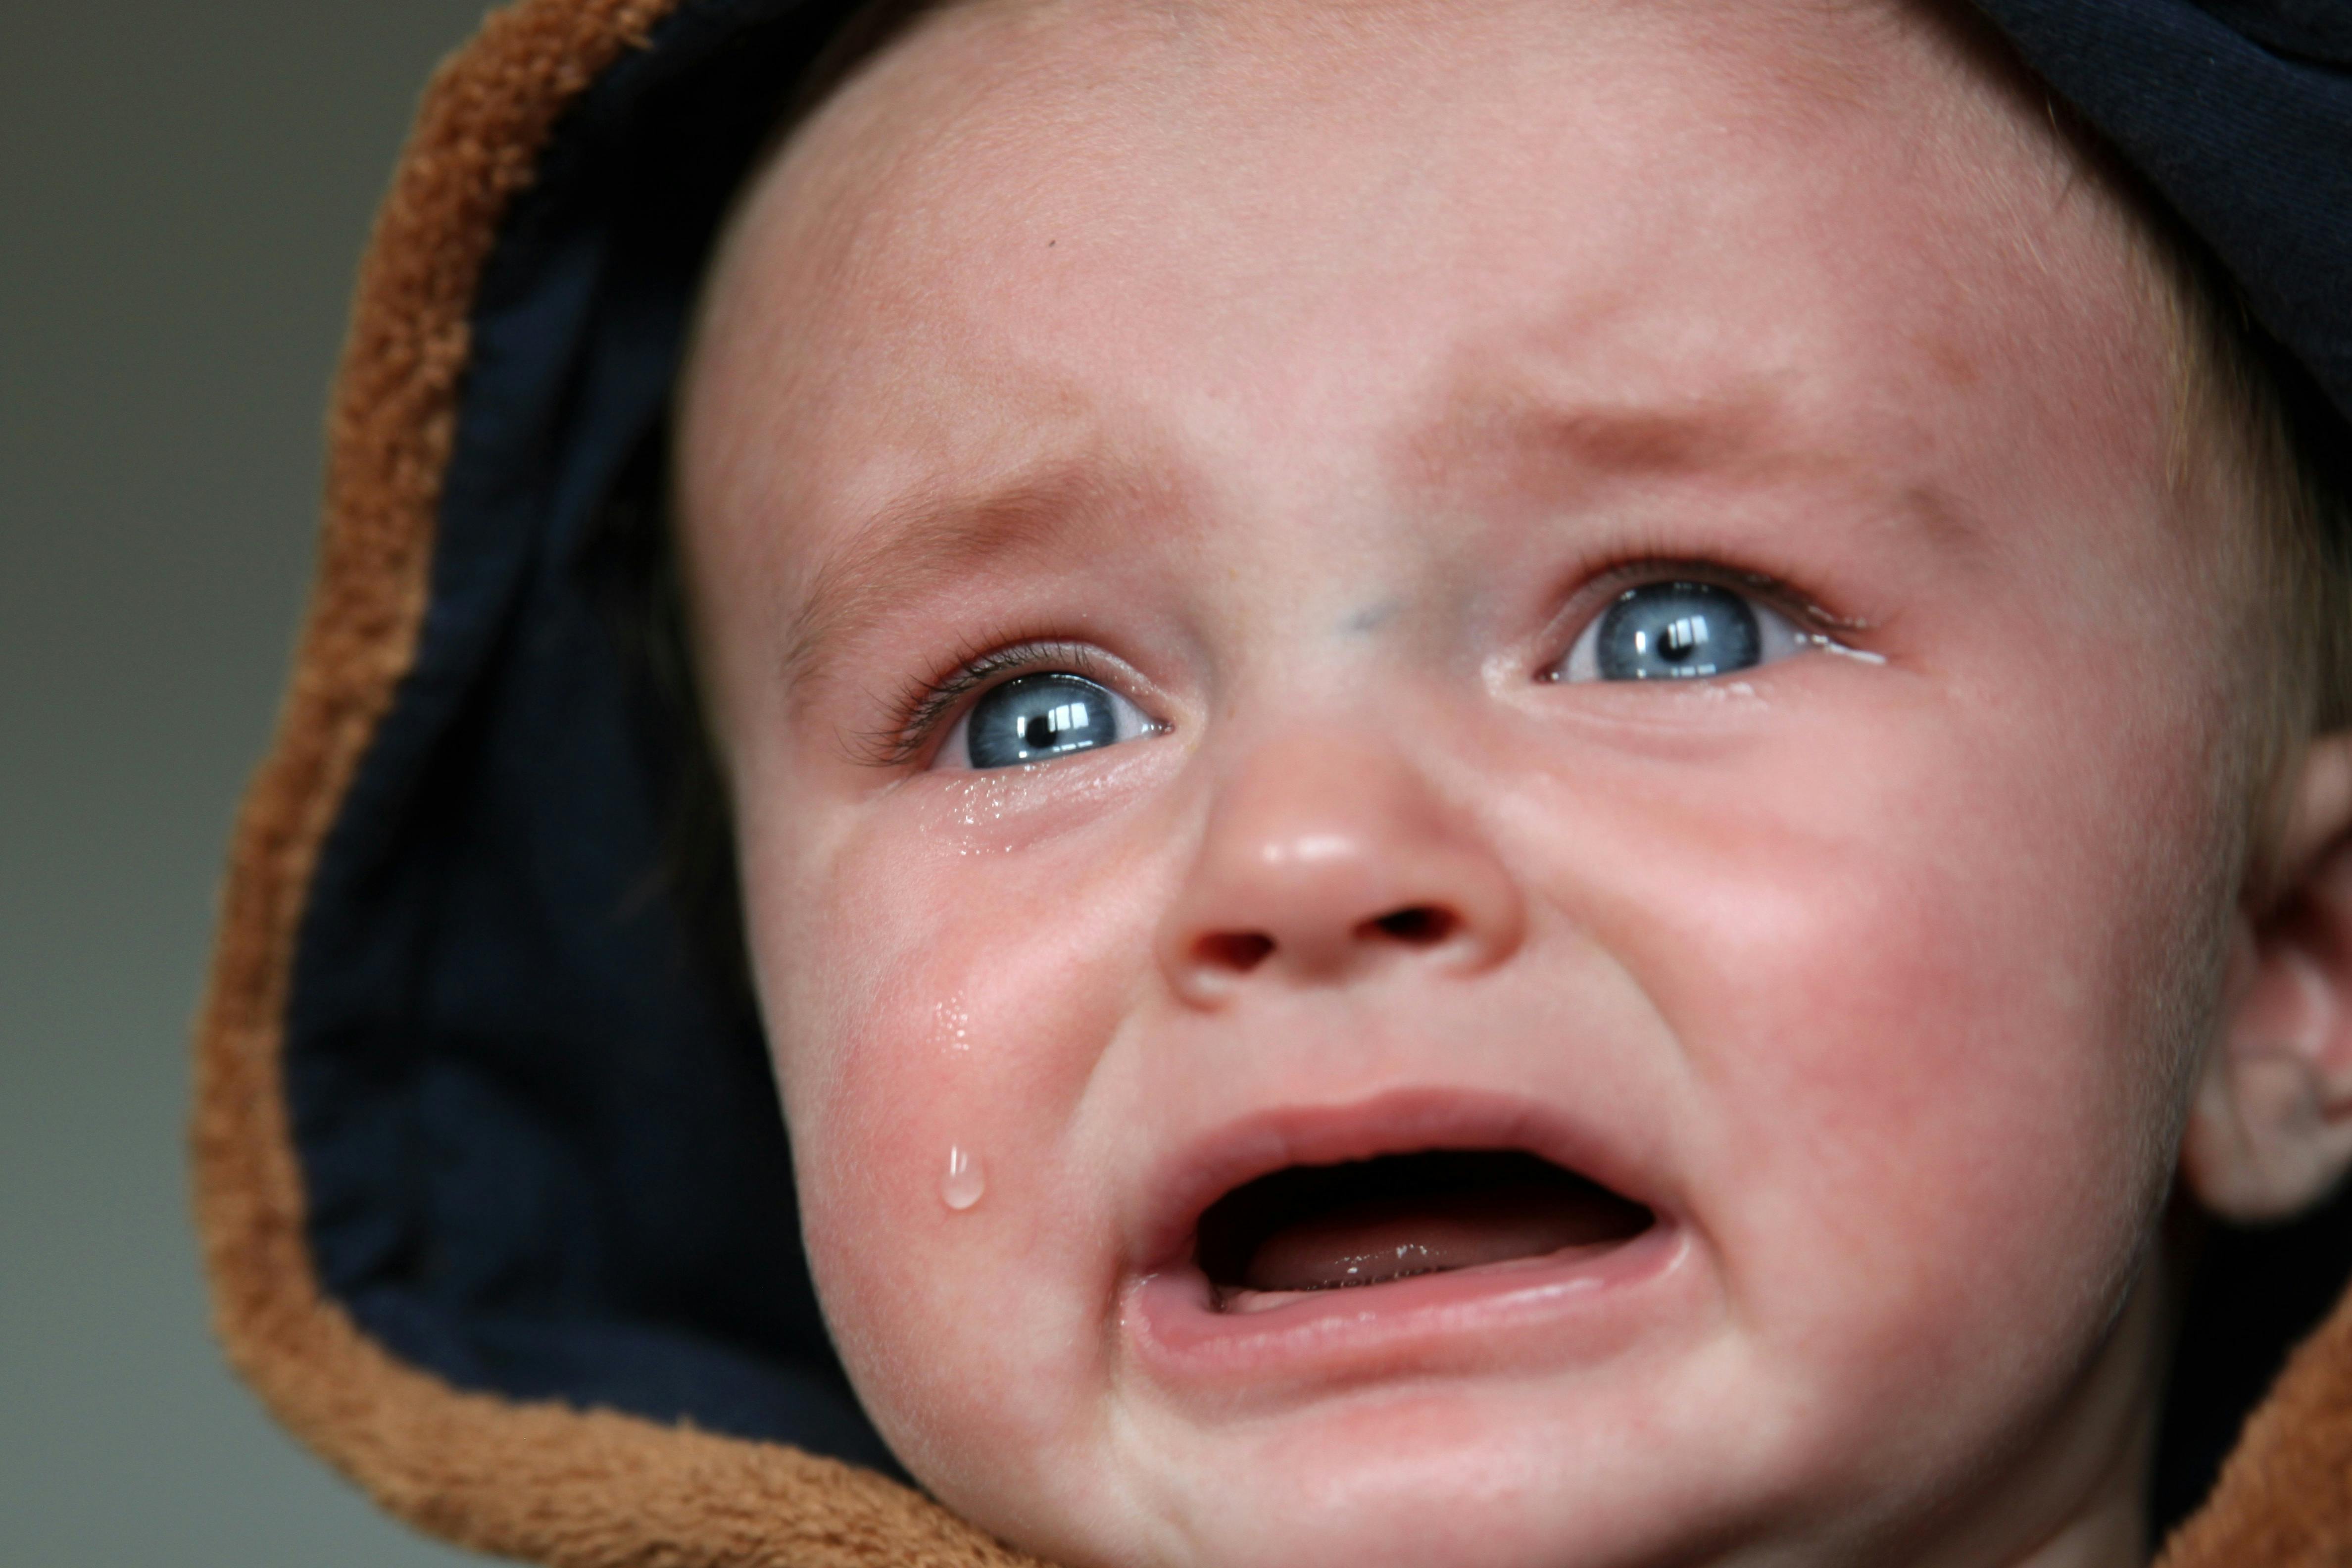 baby-tears-small-child-sad-47090.jpeg (4752×3168)